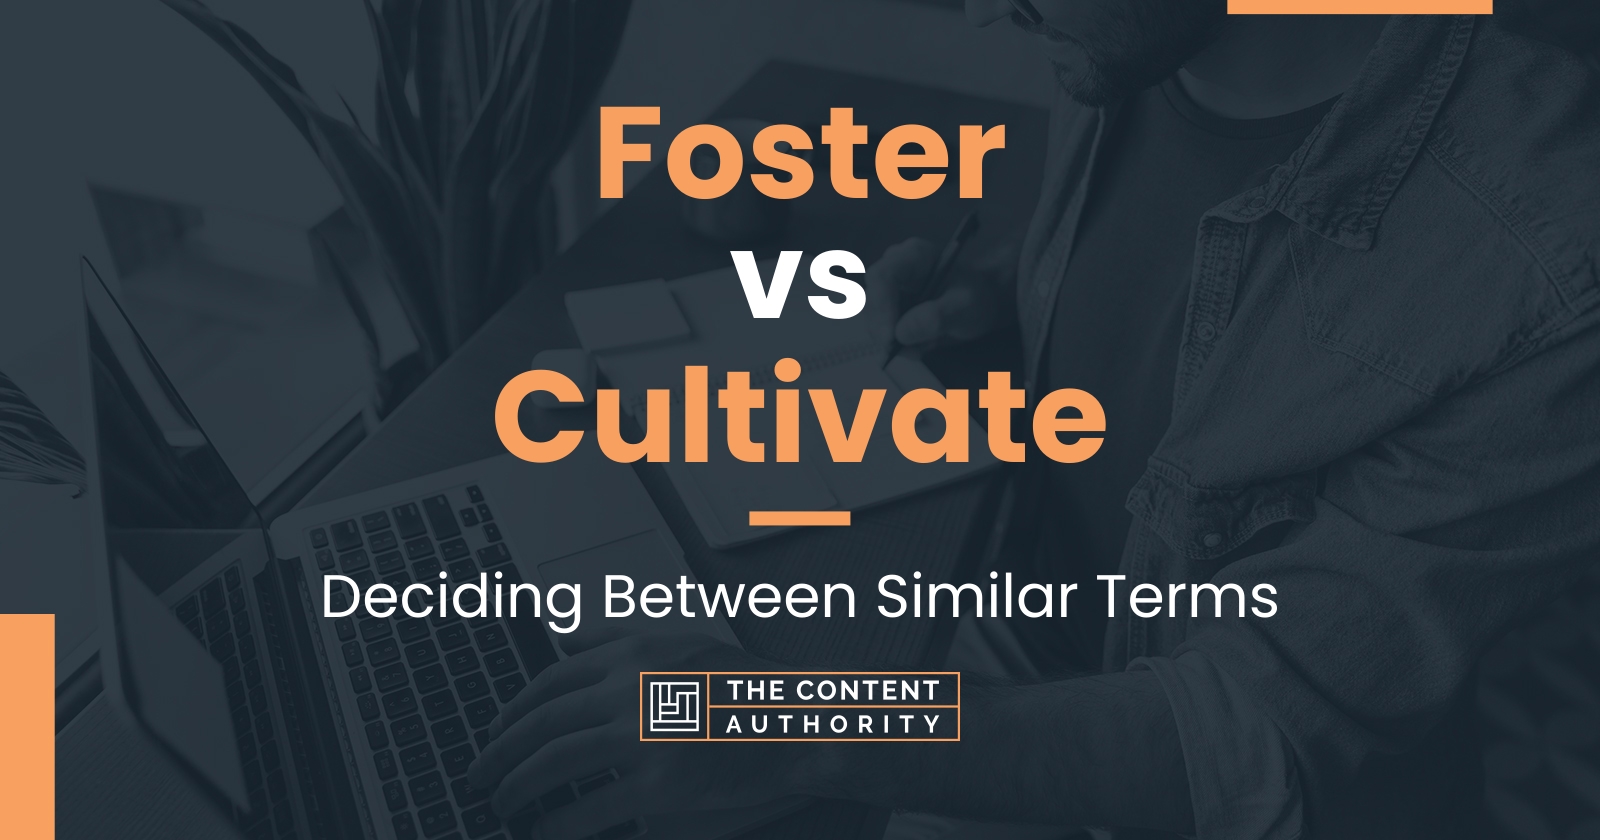 Foster vs Cultivate: Deciding Between Similar Terms